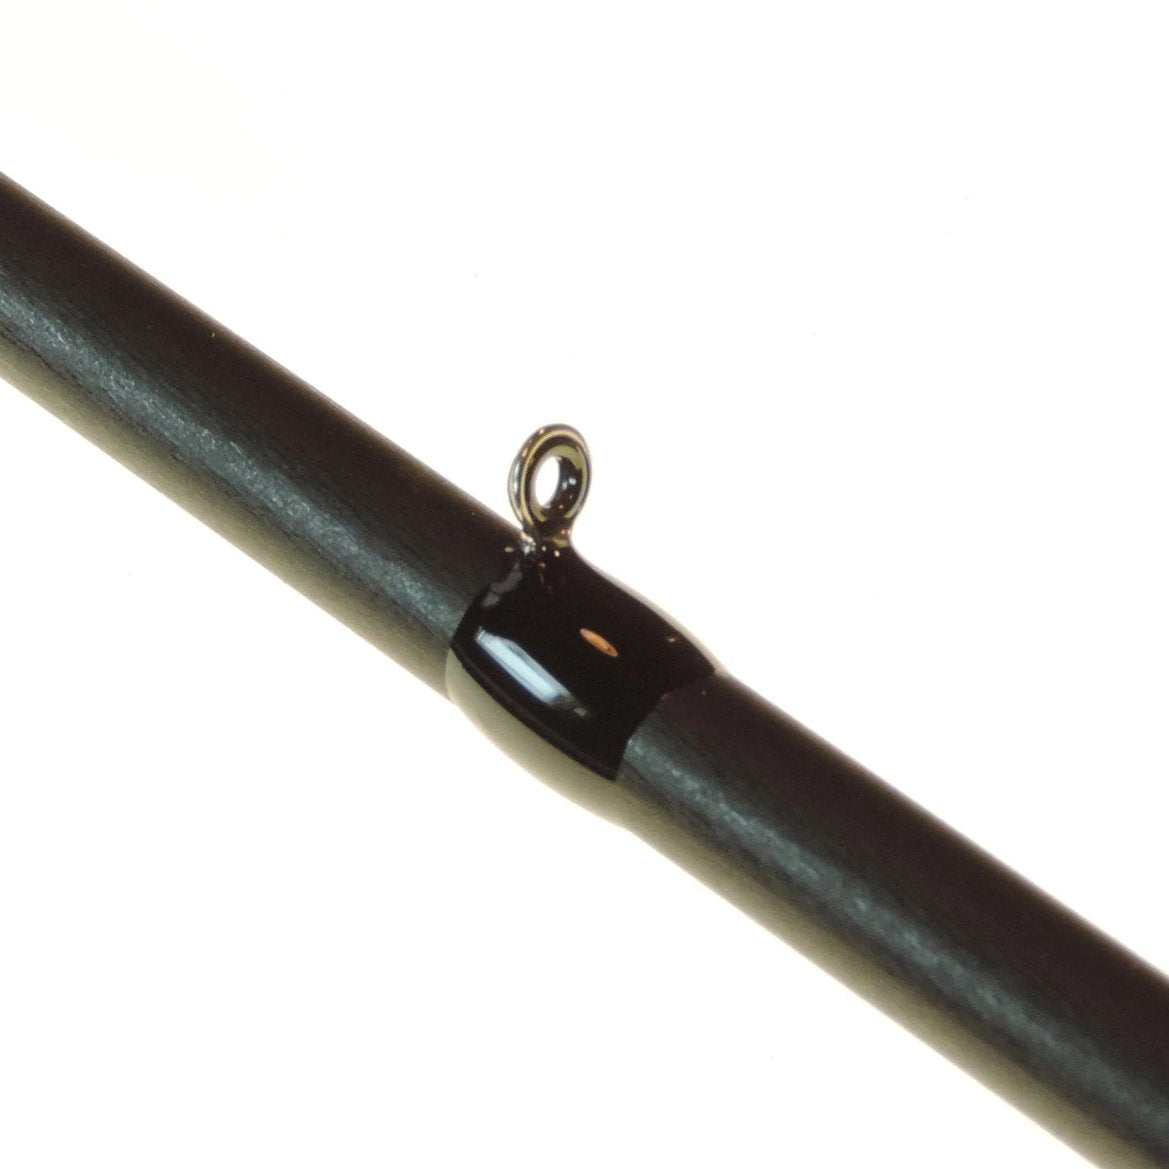 S-Glass Cranking Rod - Rebound Crankbait Rods for Lipless